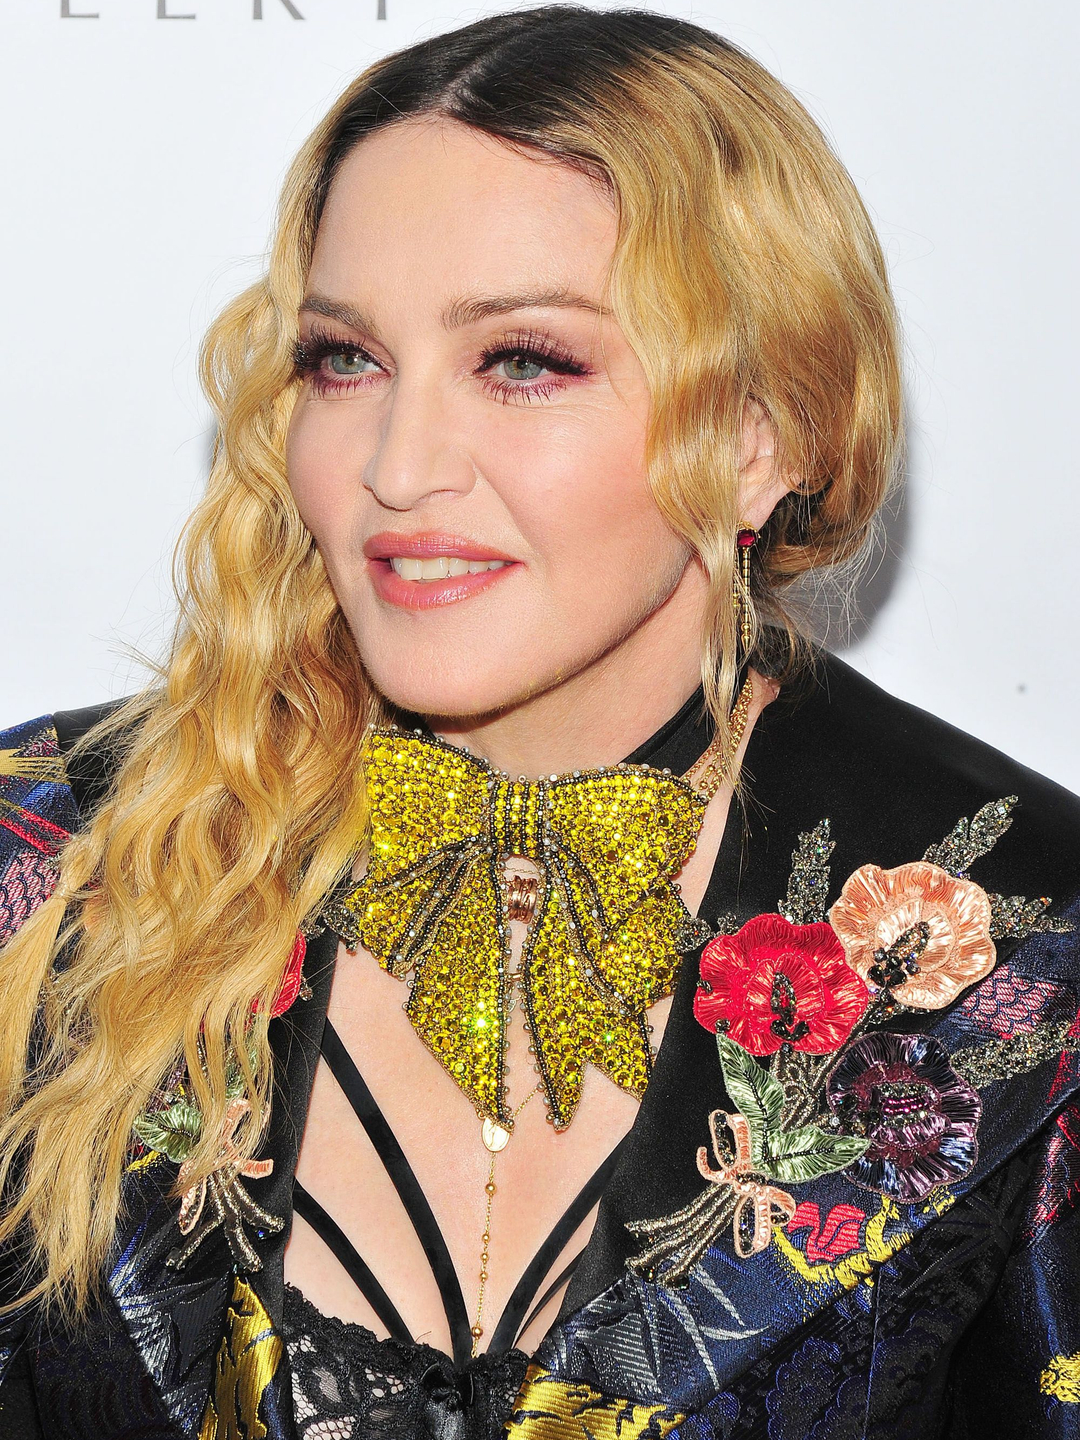 Madonna current look